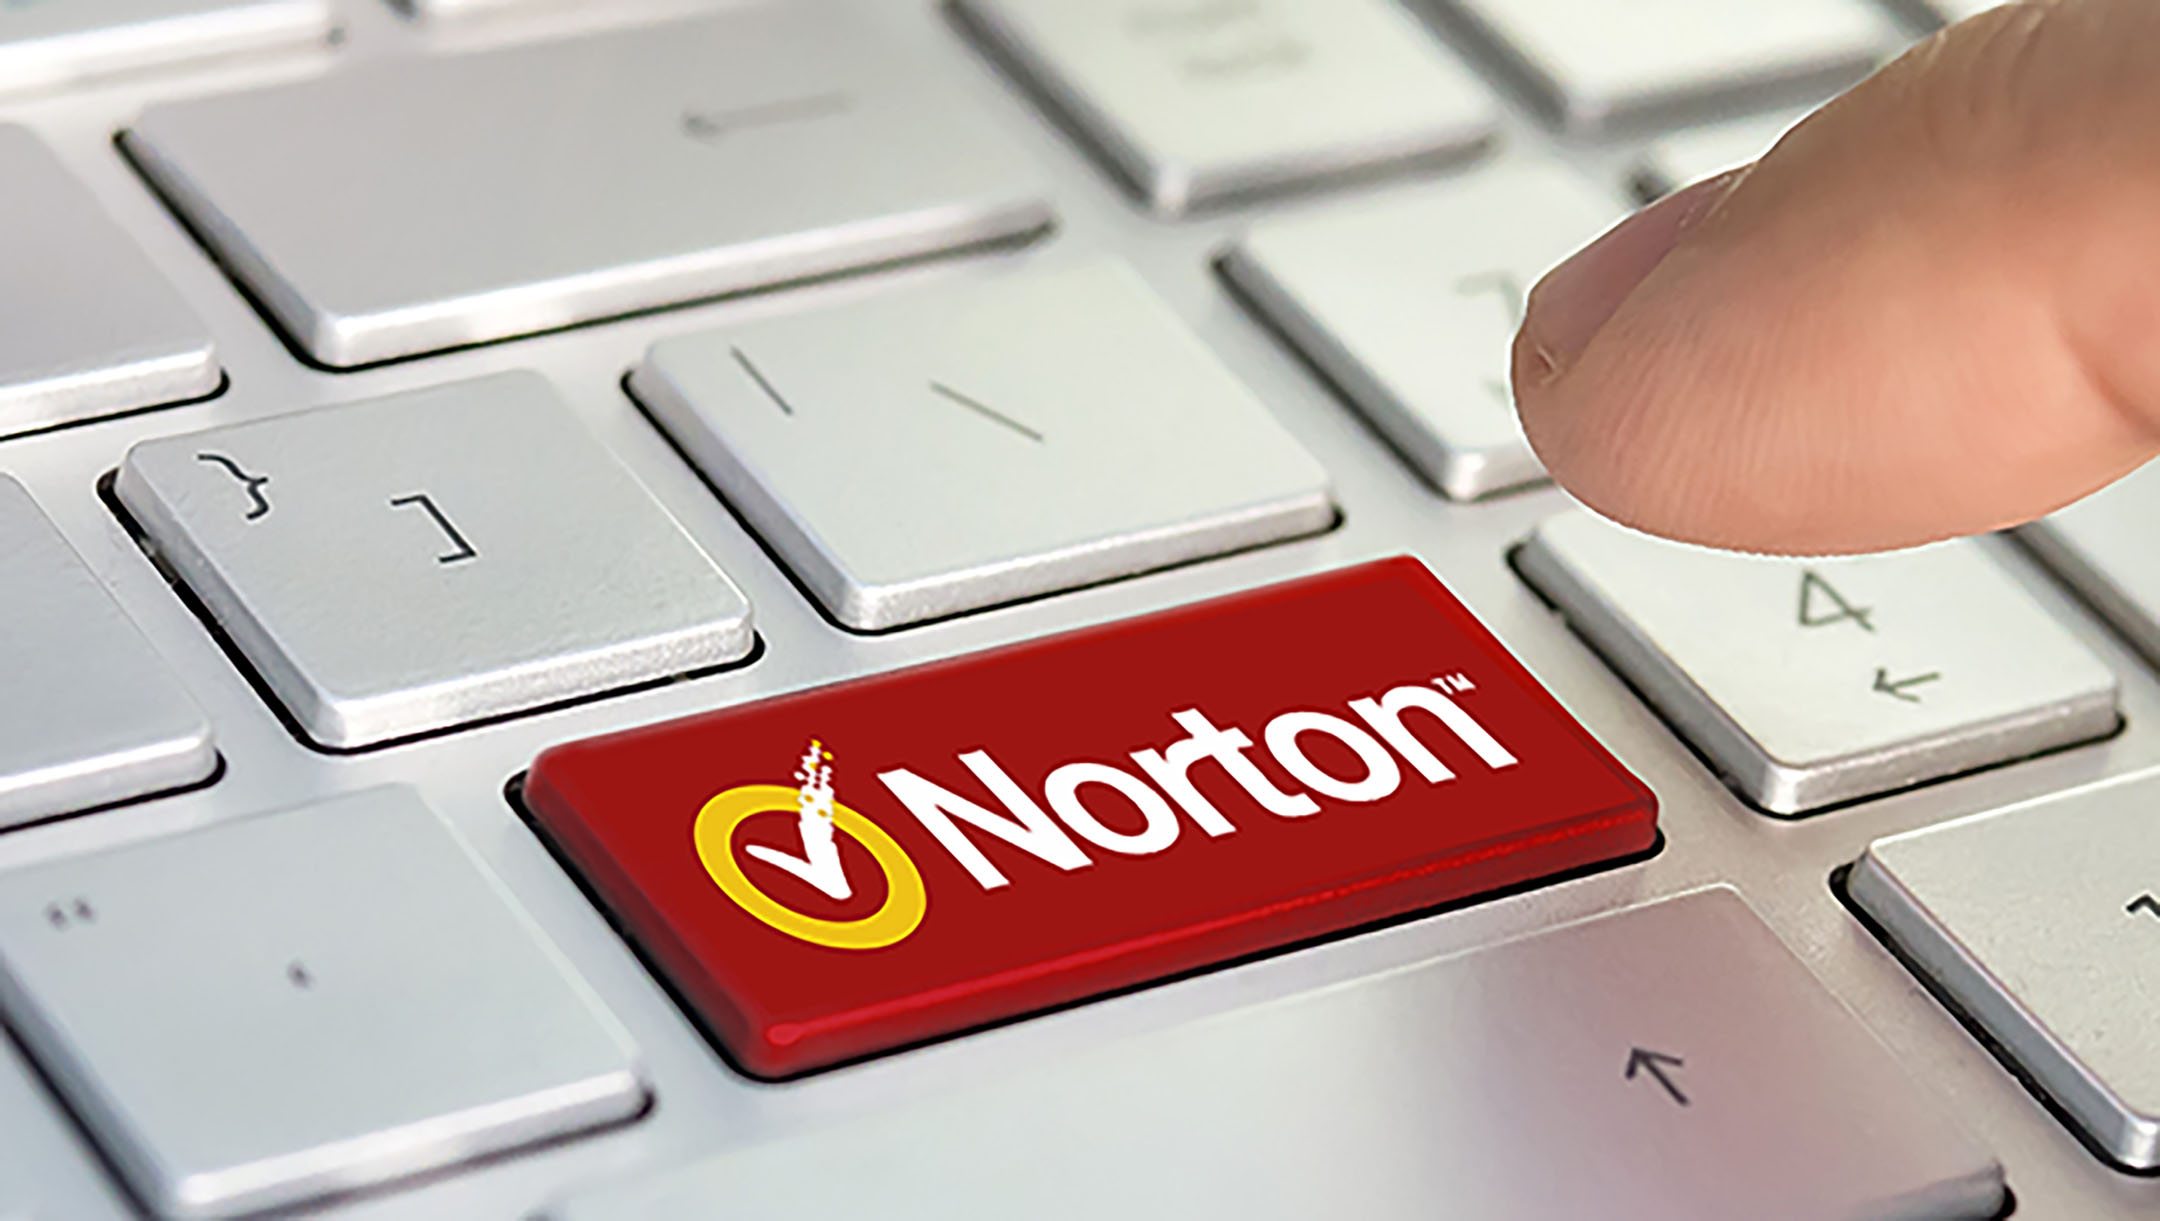 Norton 360 Antivirus - recensione e guida 2022